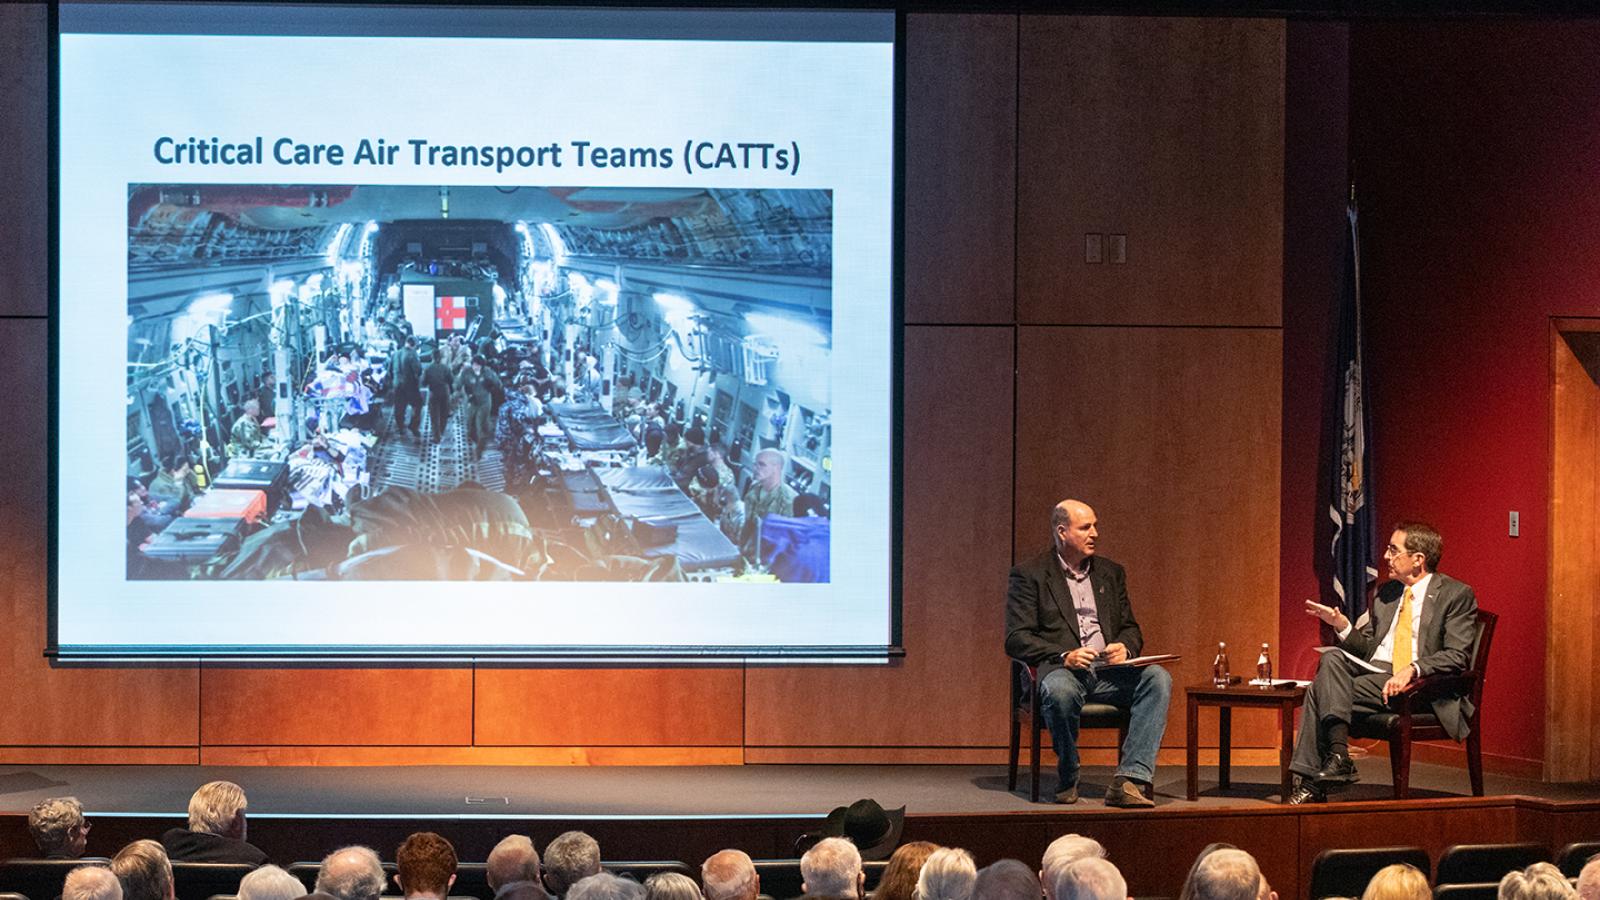 Dr. Kellermann speaking on critical care air transport teams